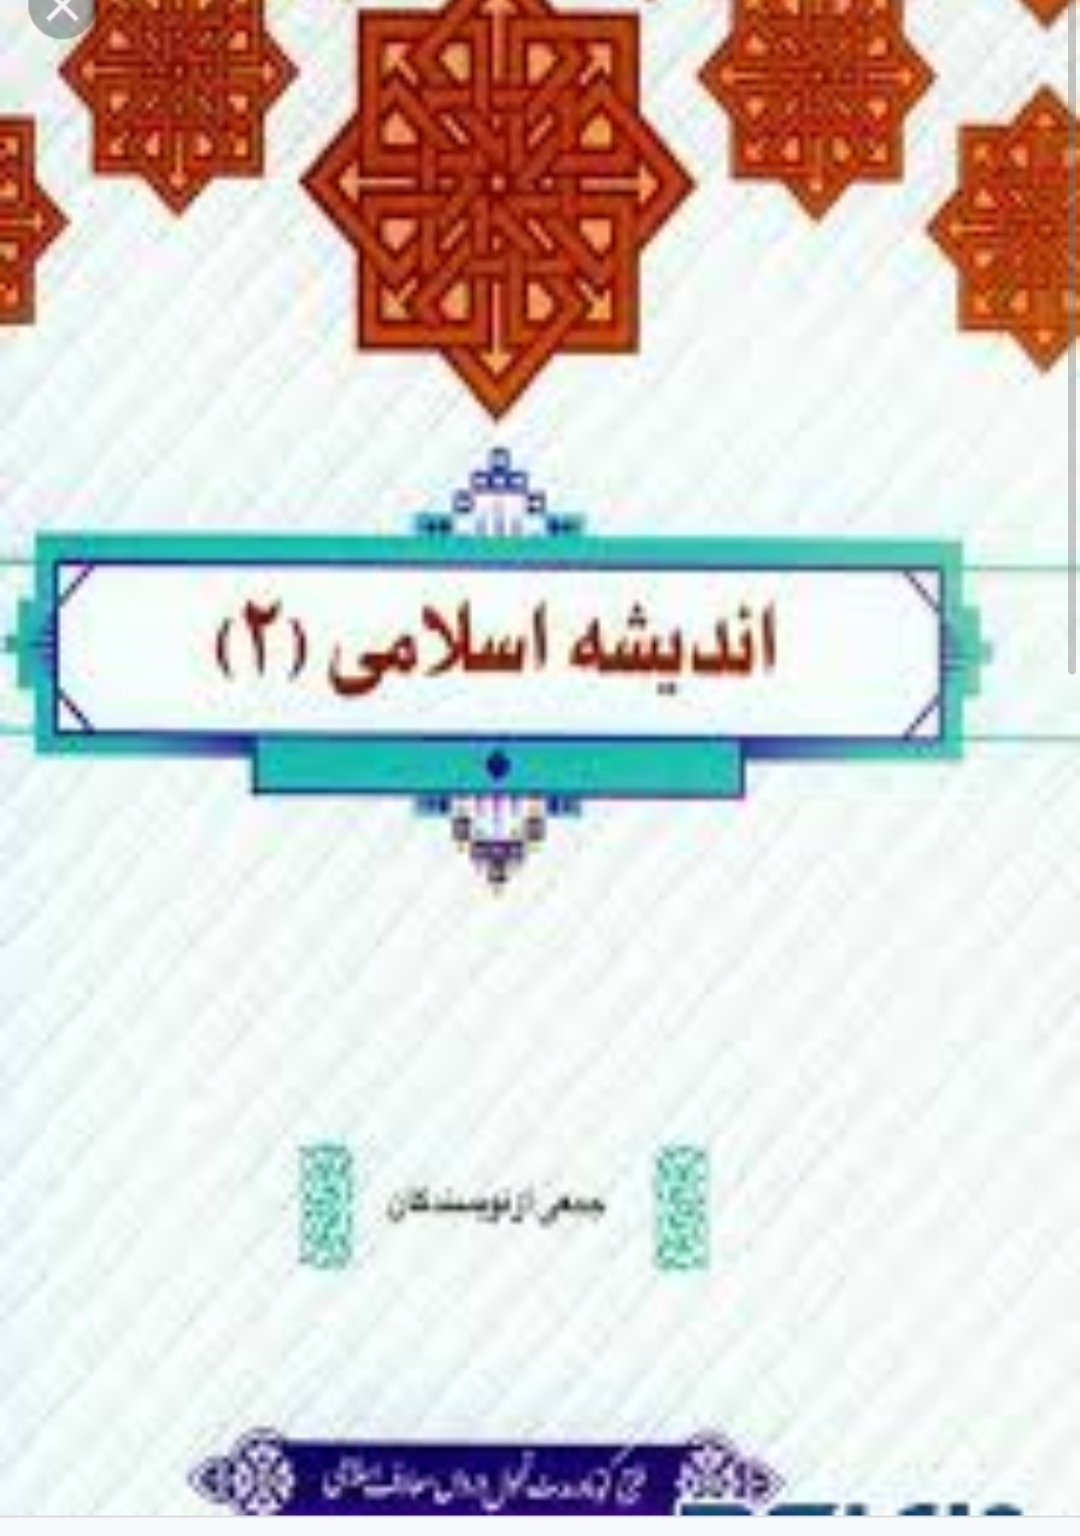 پی دی اف کتاب اندیشه اسلامی 2 نویسنده جمعی از نویسندگان چاپ جدید 1401